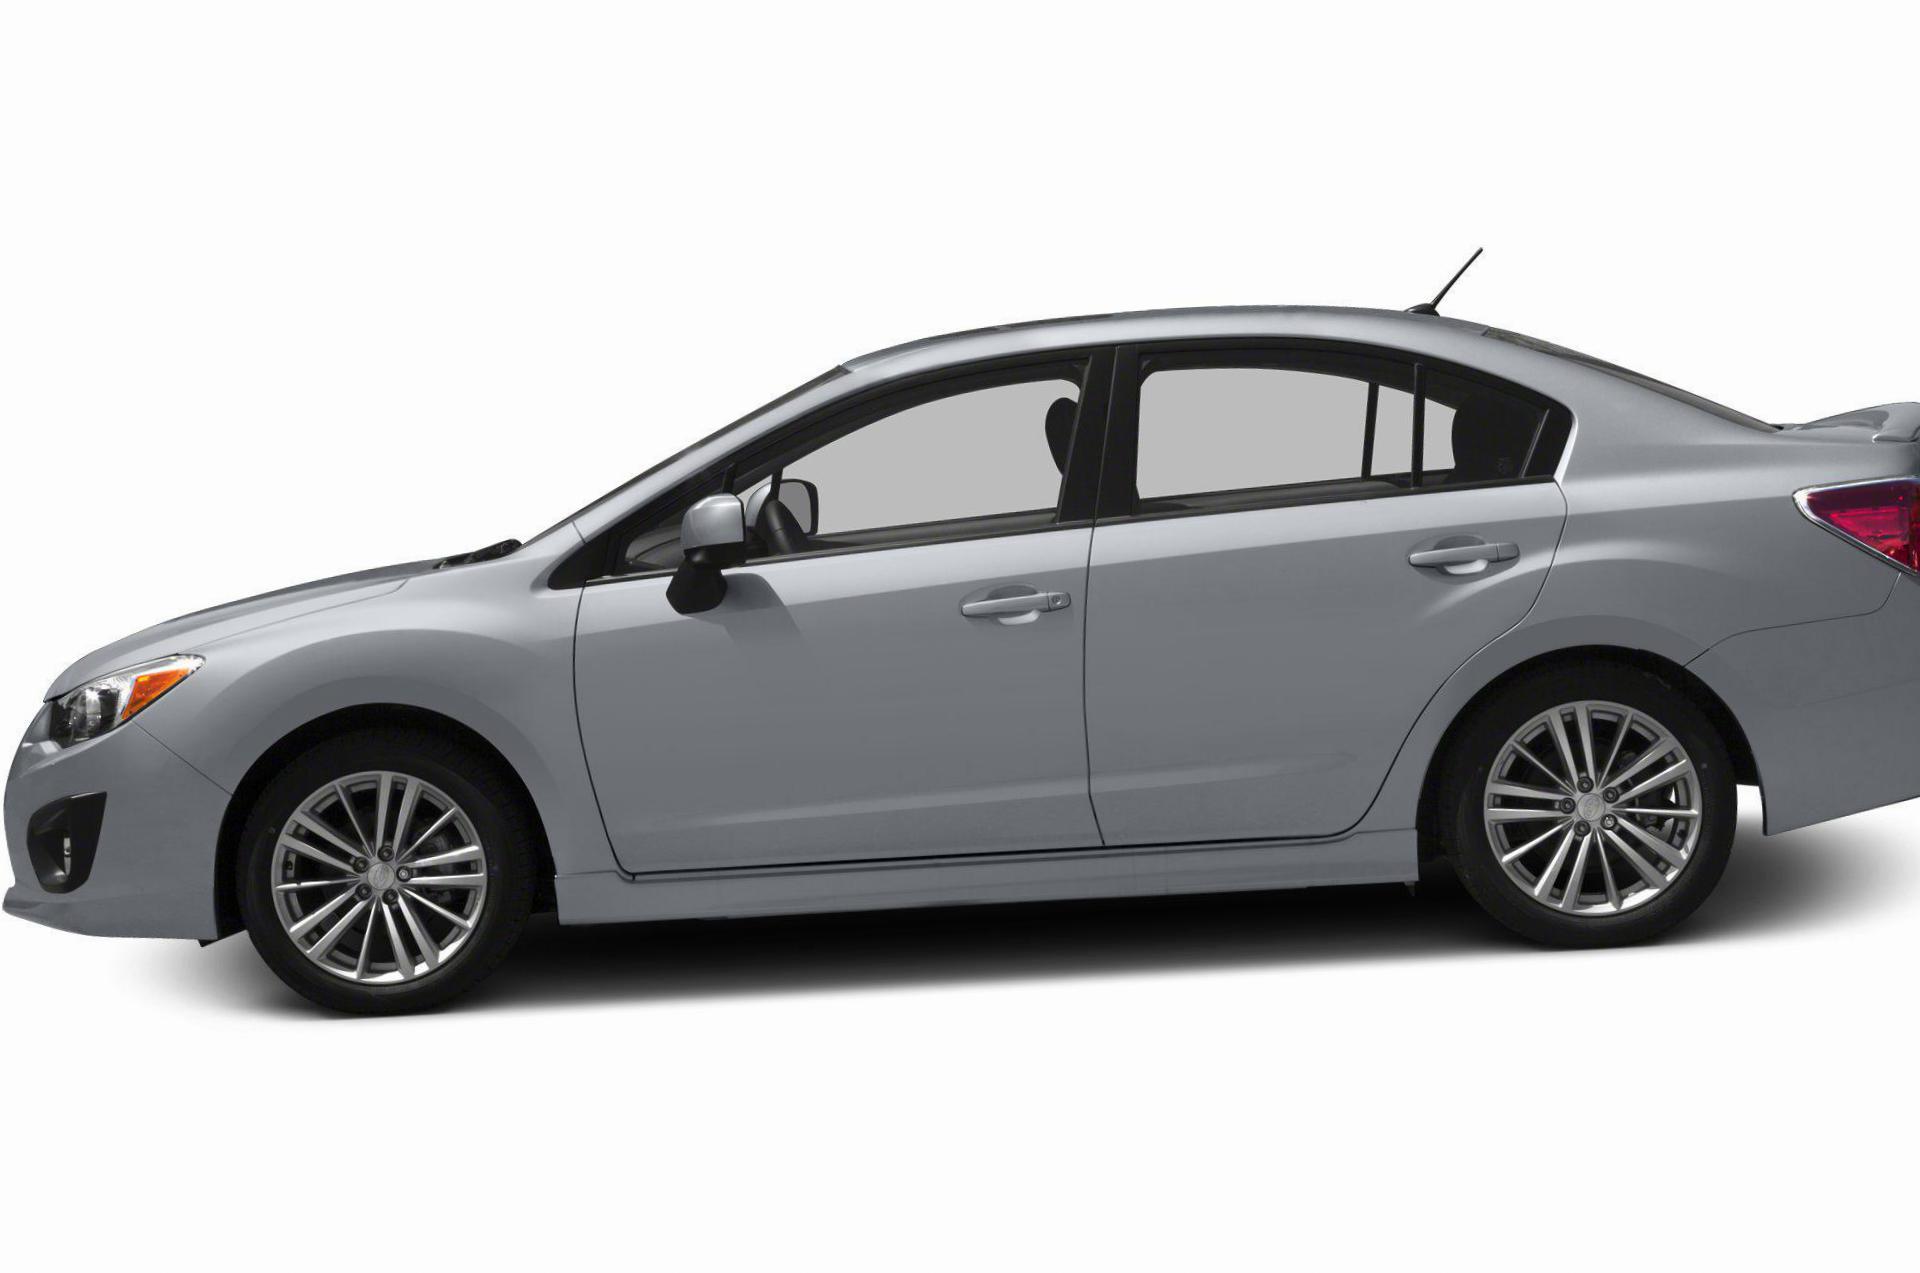 Subaru Impreza cost 2012